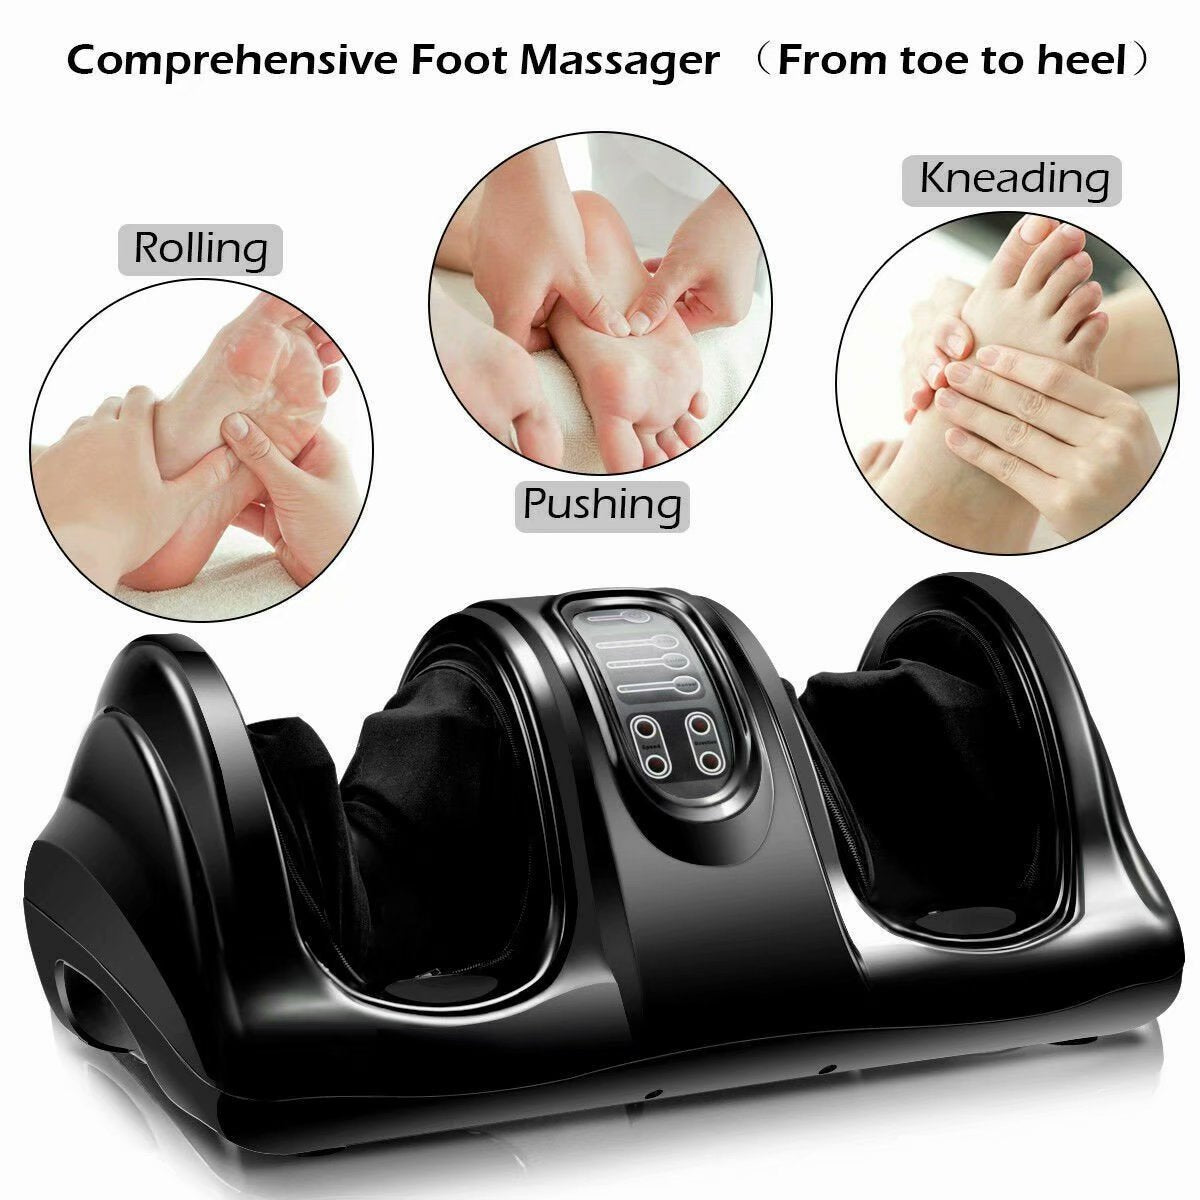 Therapeutic Shiatsu Foot Massager Combine Kneading, Rolling and Massag